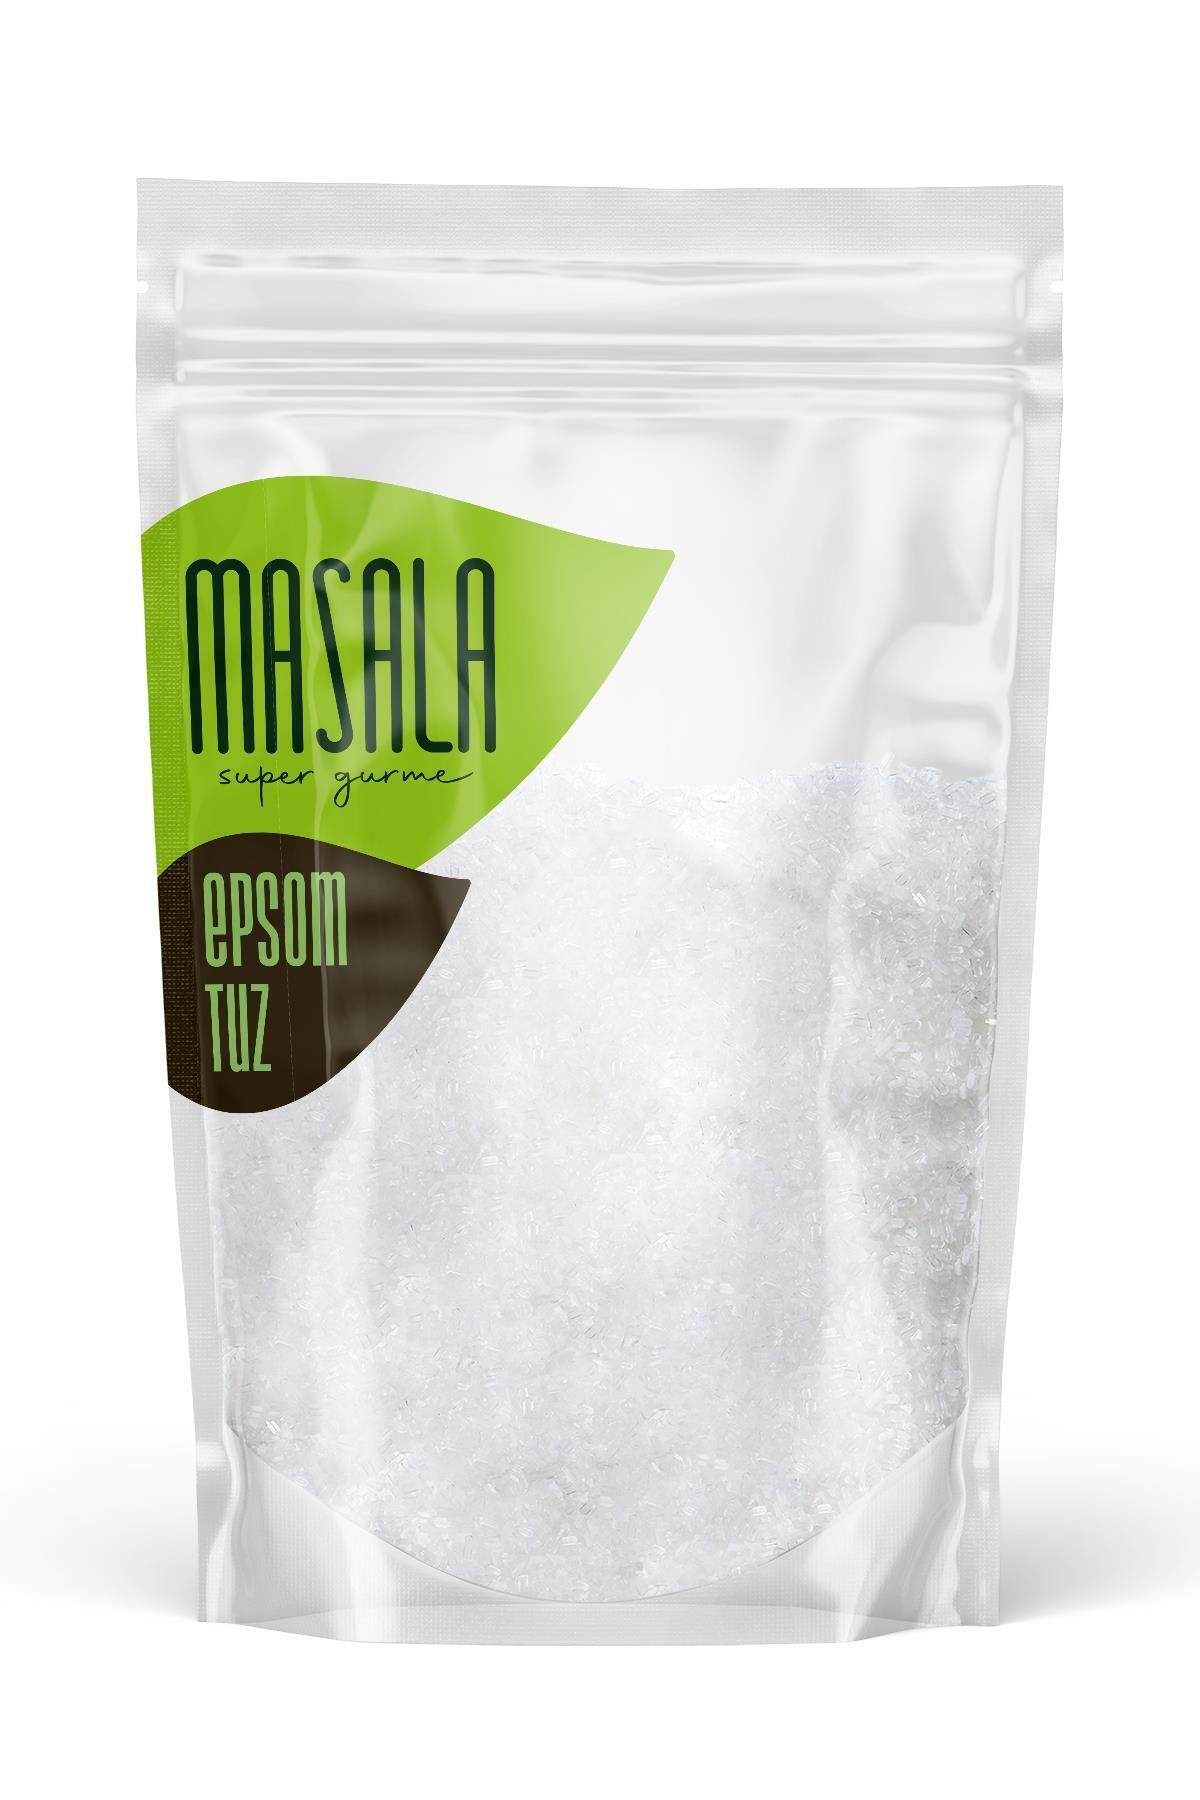 Super Gurme Masala Epsom Tuz 1 kg (İngiliz tuzu- magnezyum sülfat) magnesium sulfate